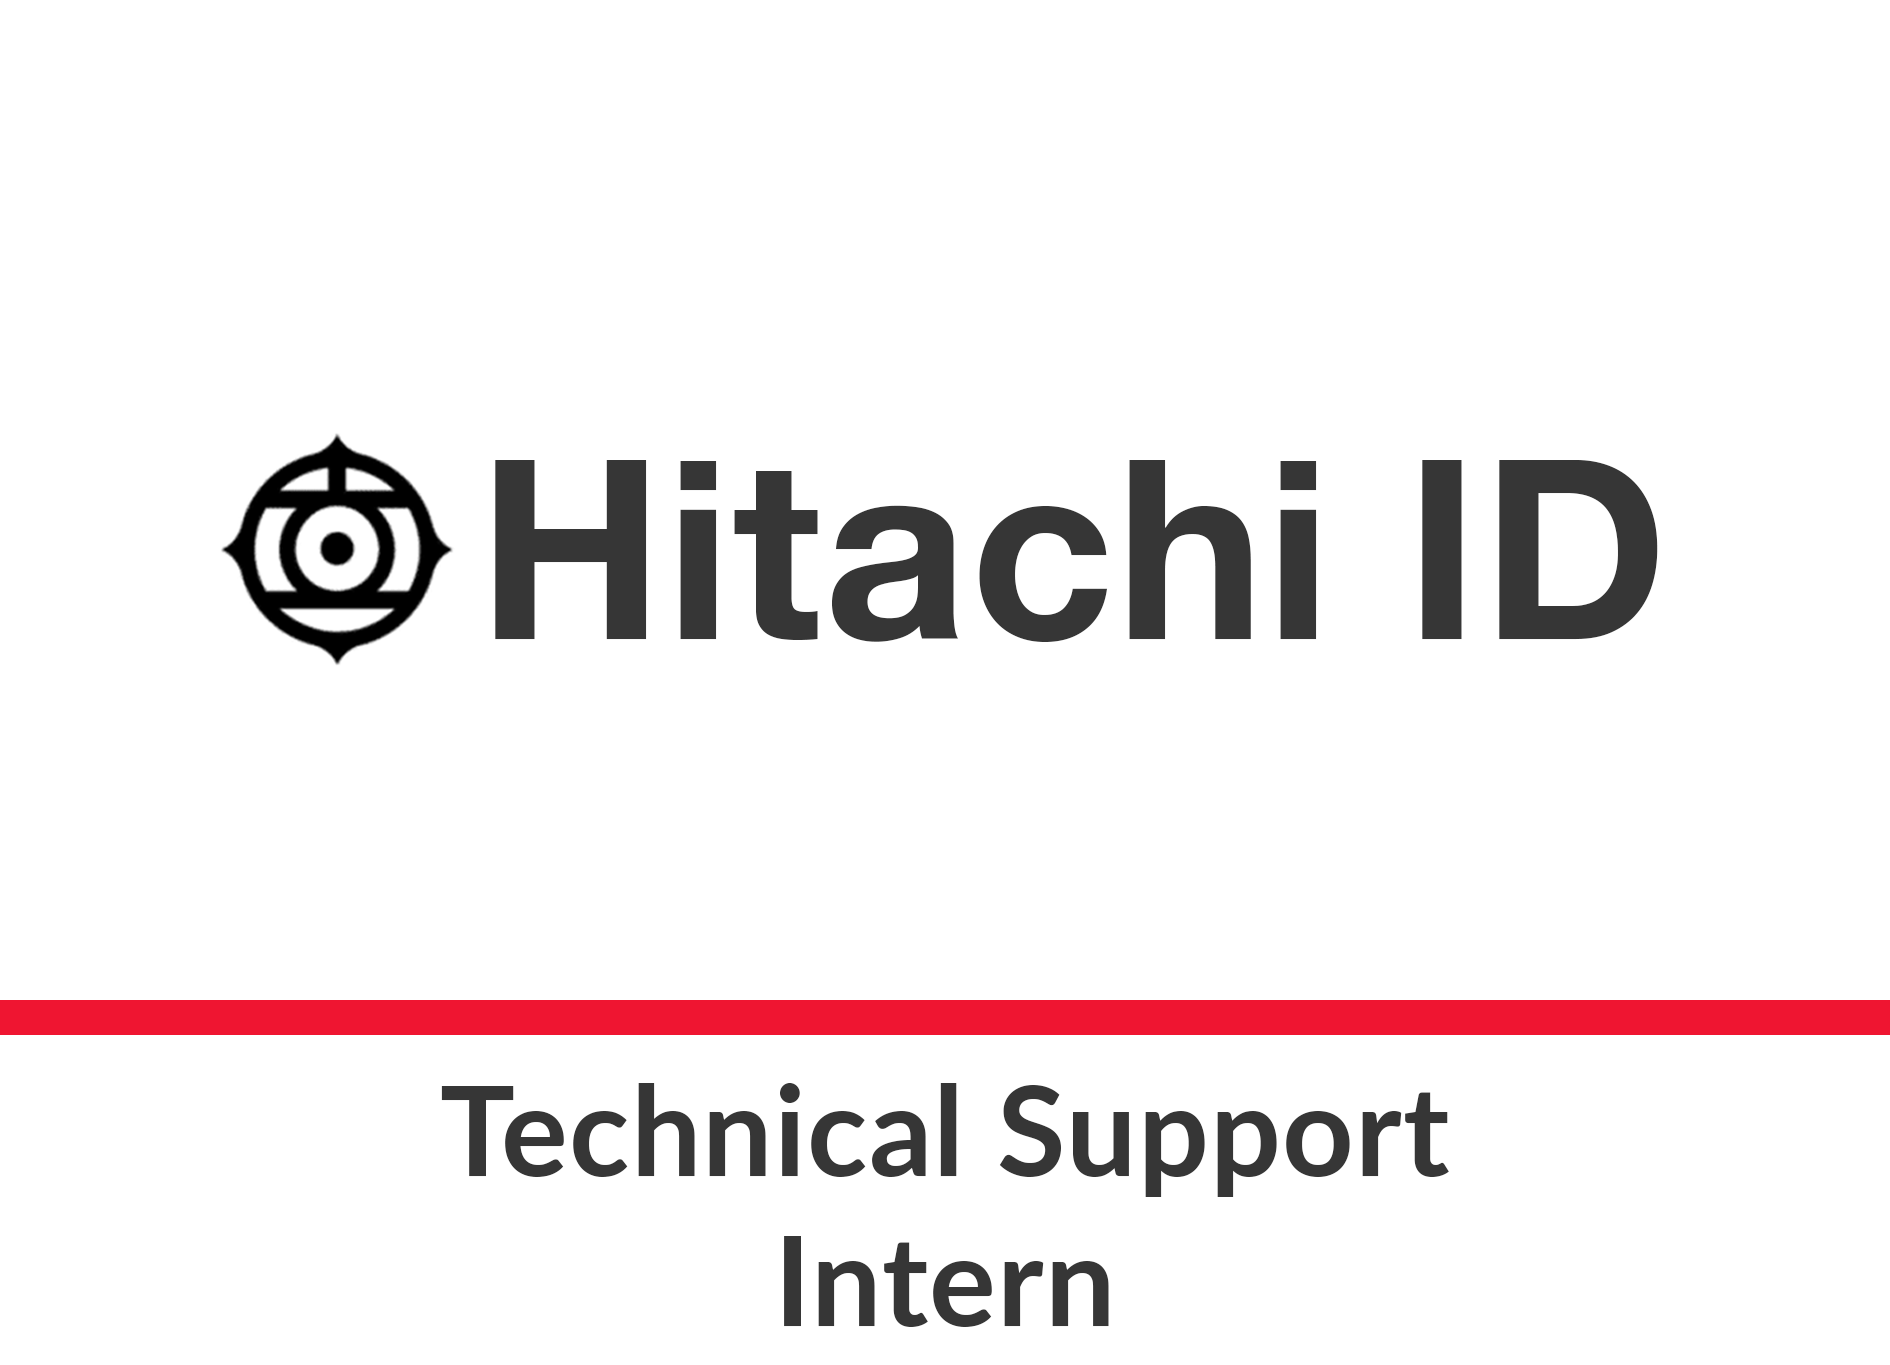 Hitachi ID Systems Logo